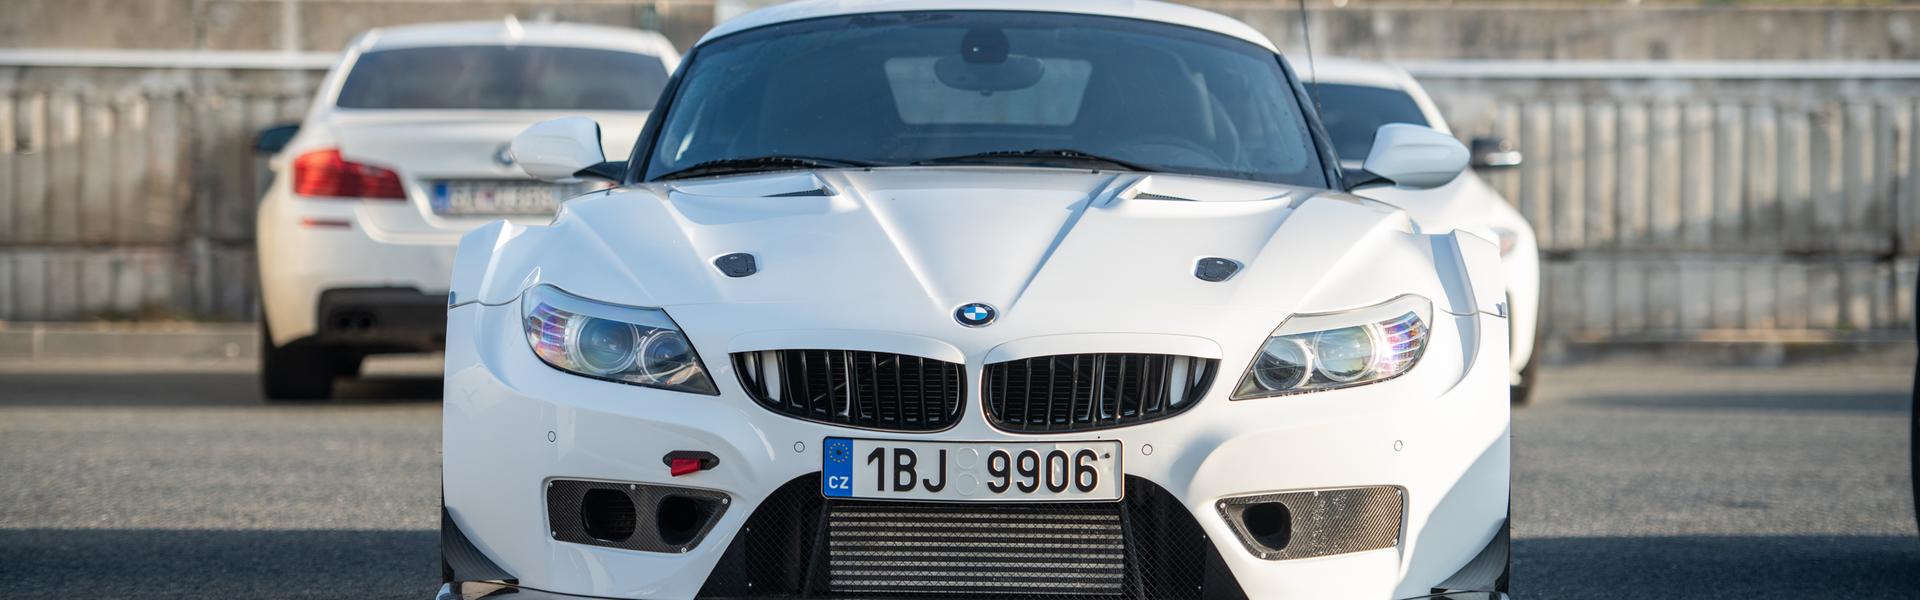 BMW Z4 GT3 Street Fighter - car for sale